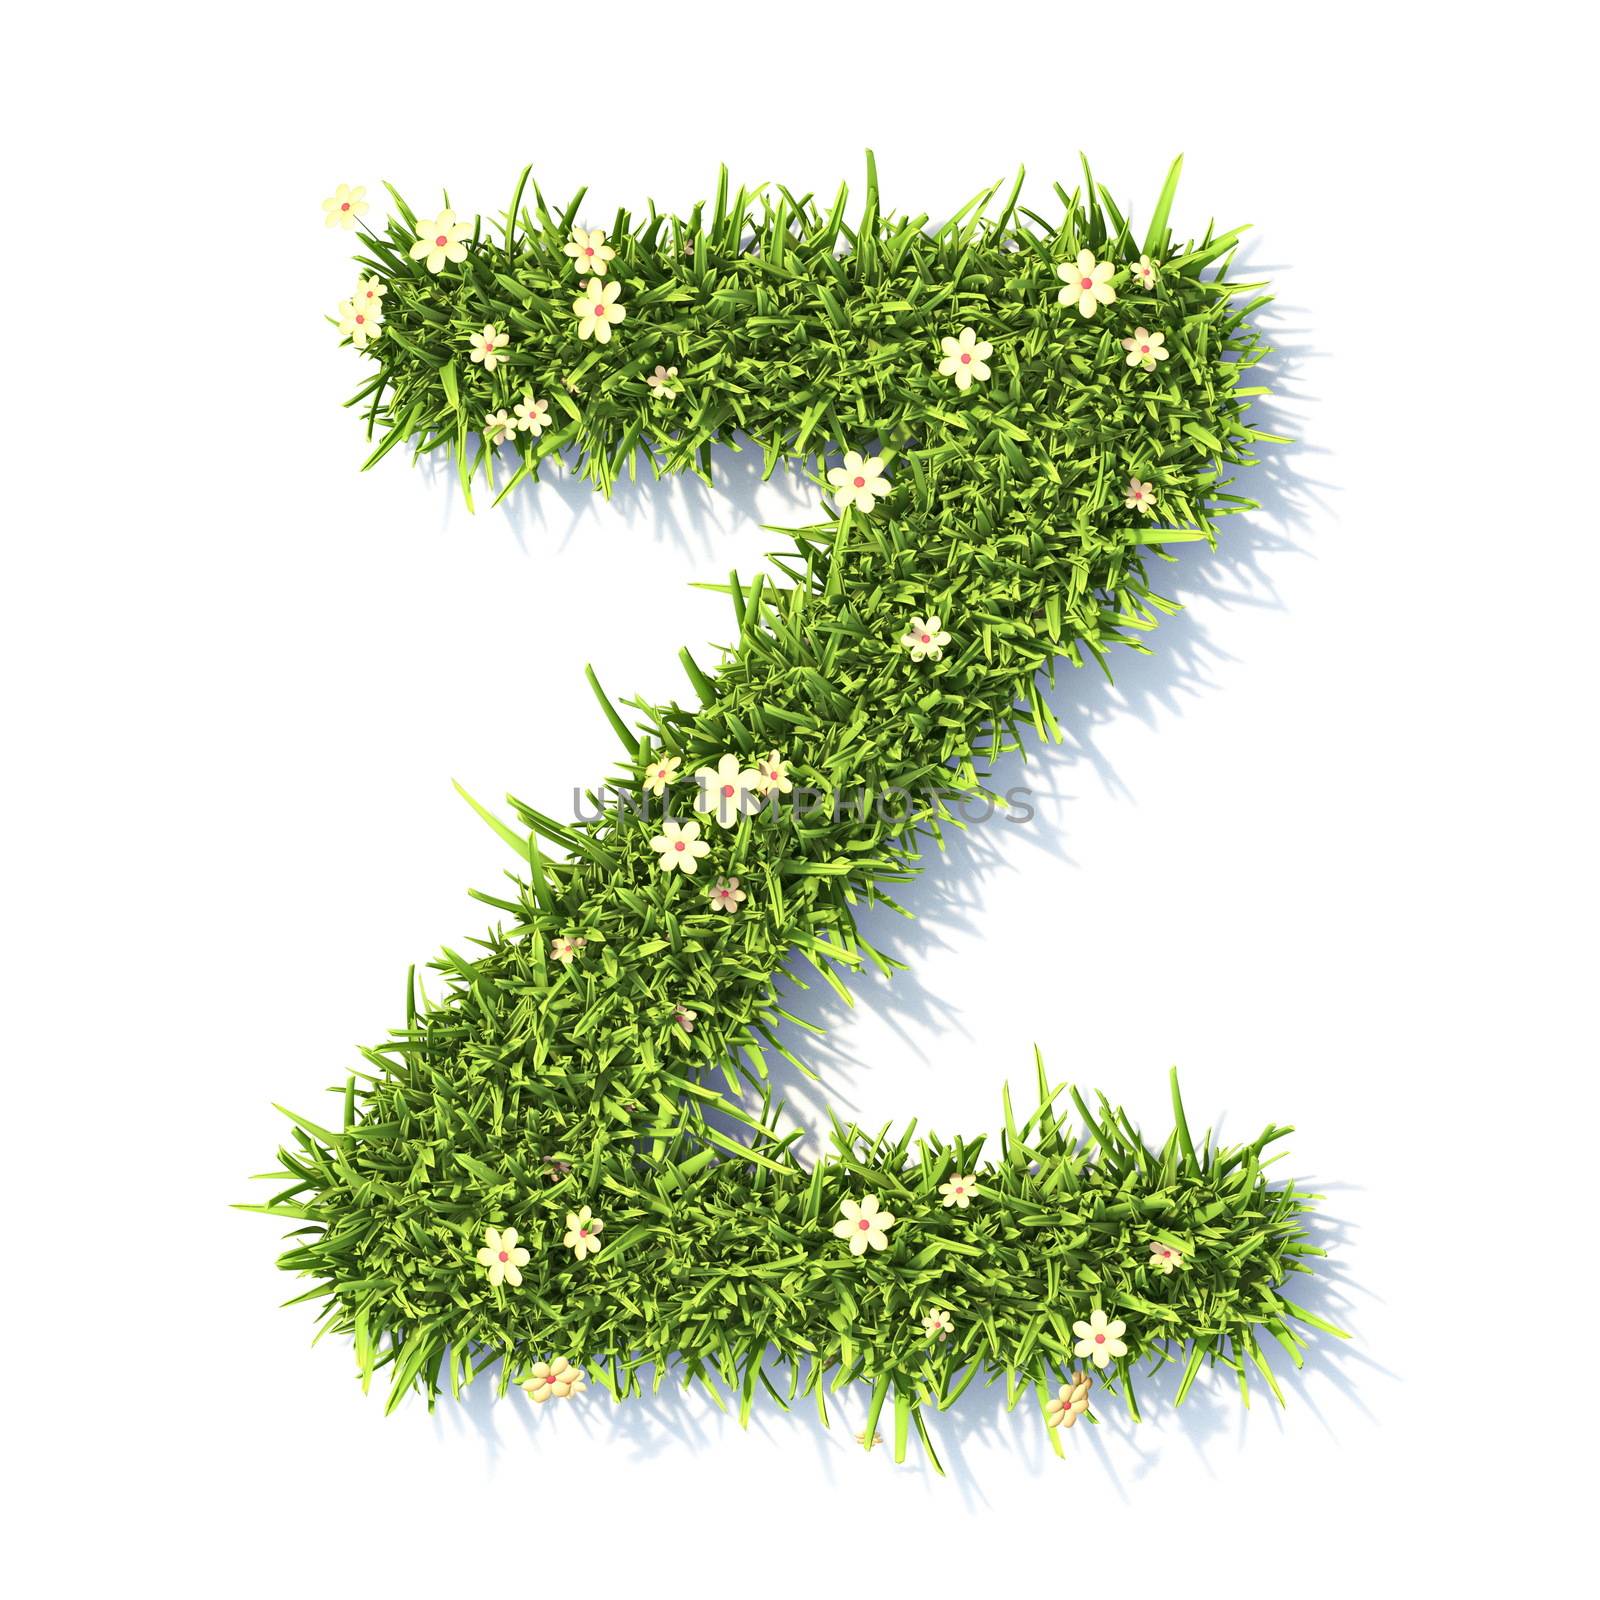 Grass font Letter Z 3D rendering illustration isolated on white background